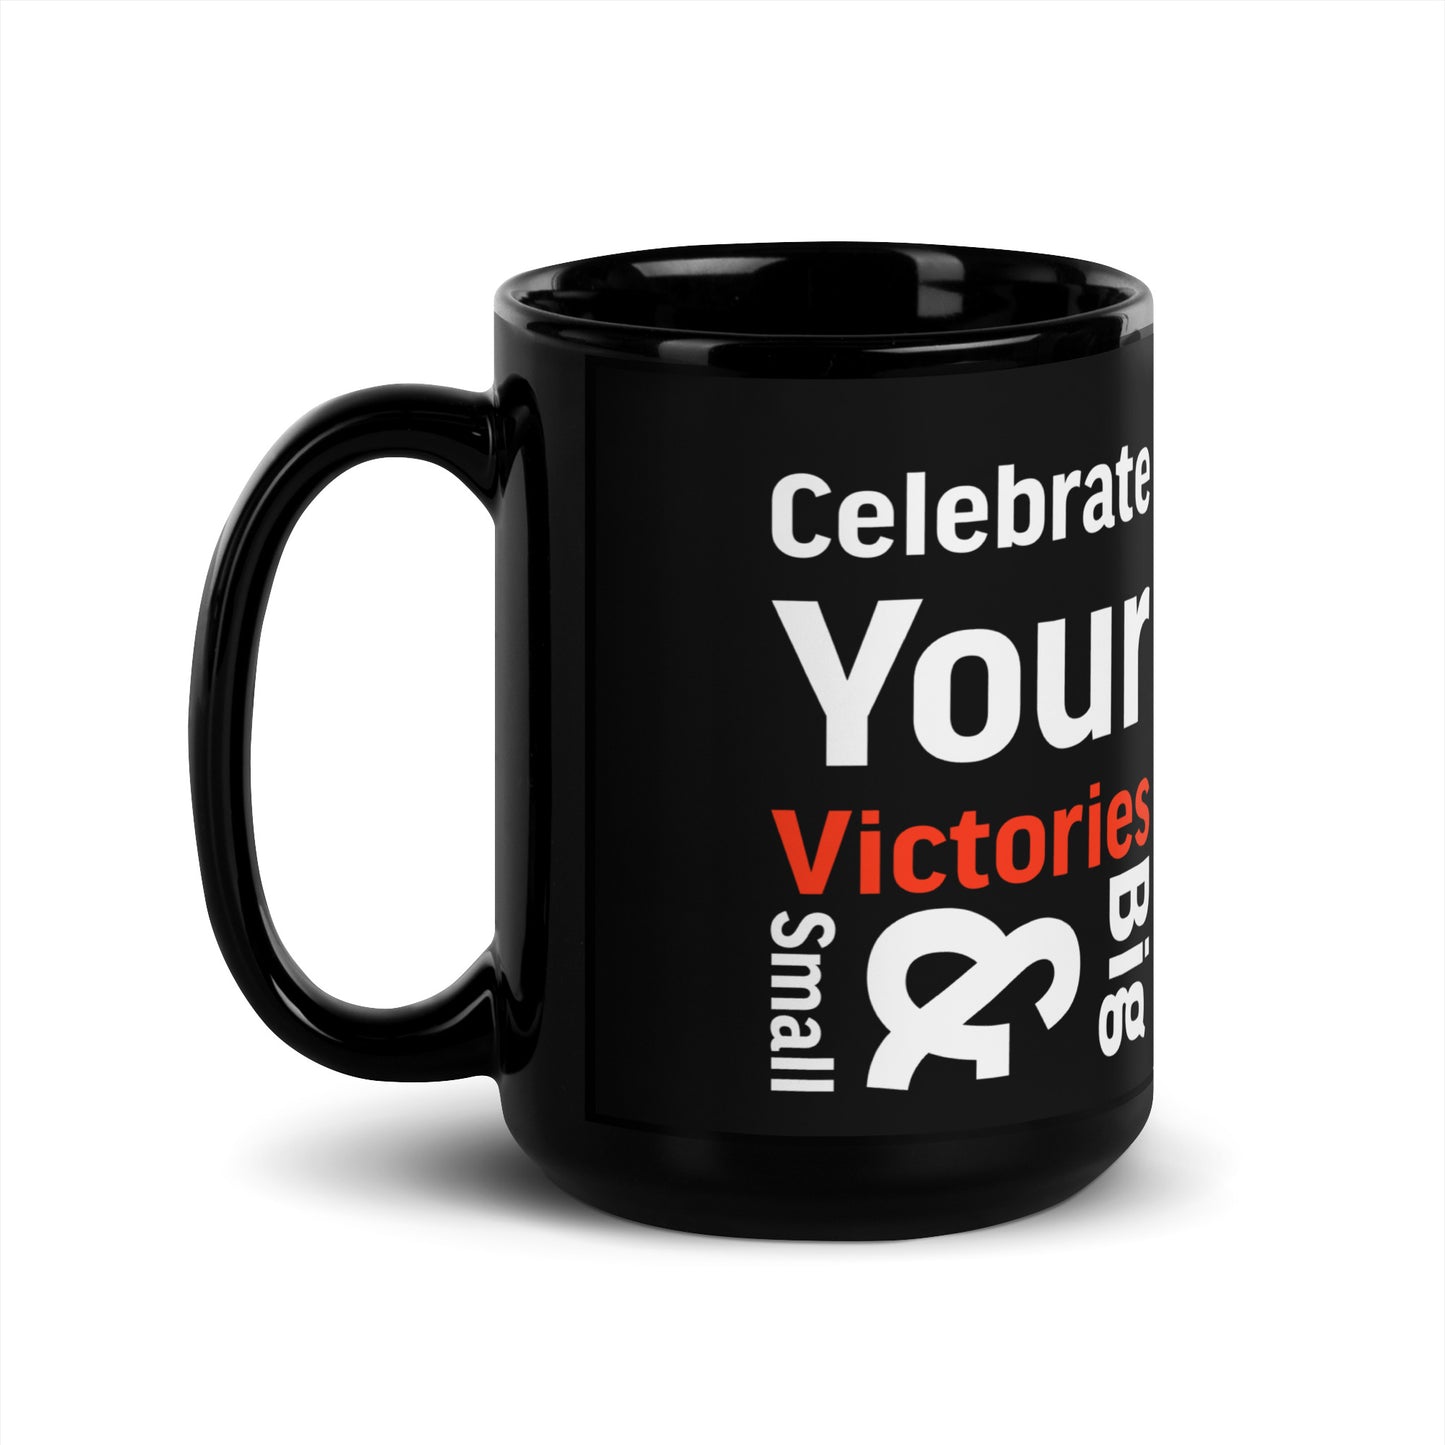 Celebrate Your Victories Black Glossy Mug